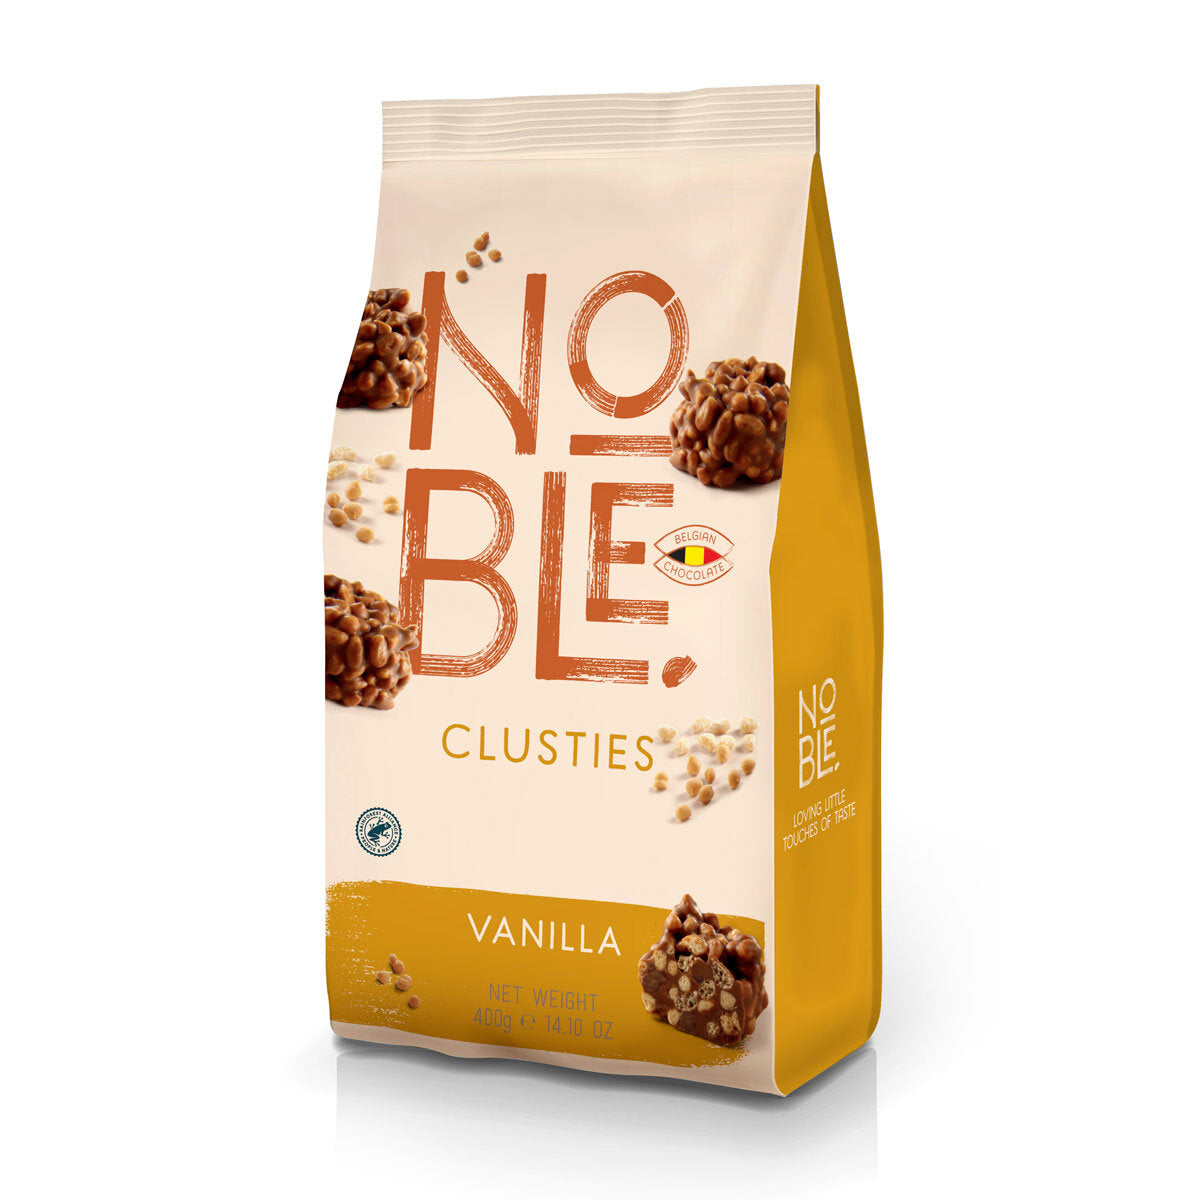 Noble Belgian Chocolate Vanilla Clusties - 400g